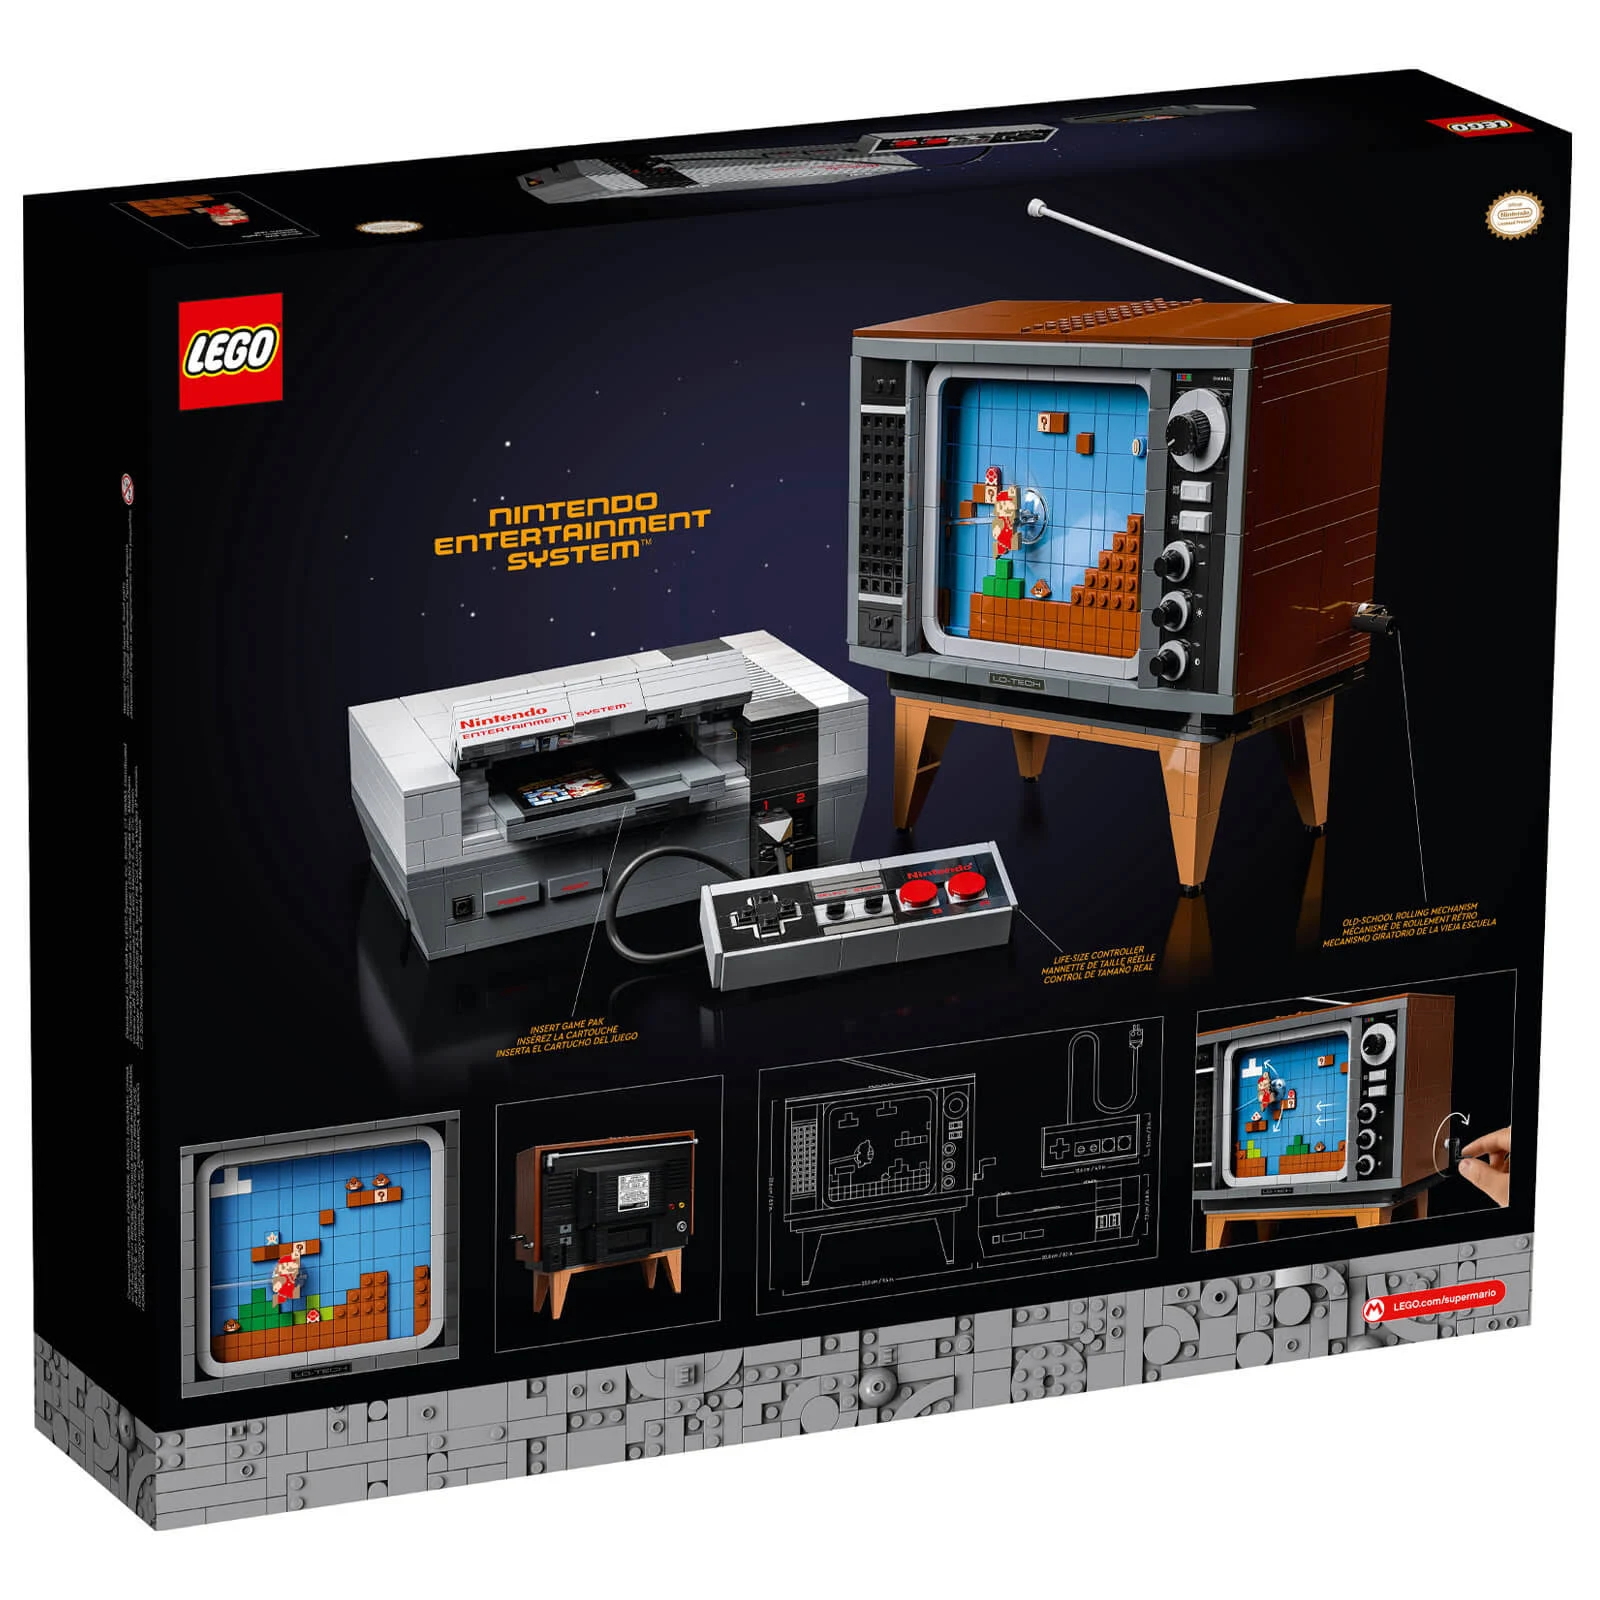 Lego 71374 Super Mario Series Nintendo Entertainment System